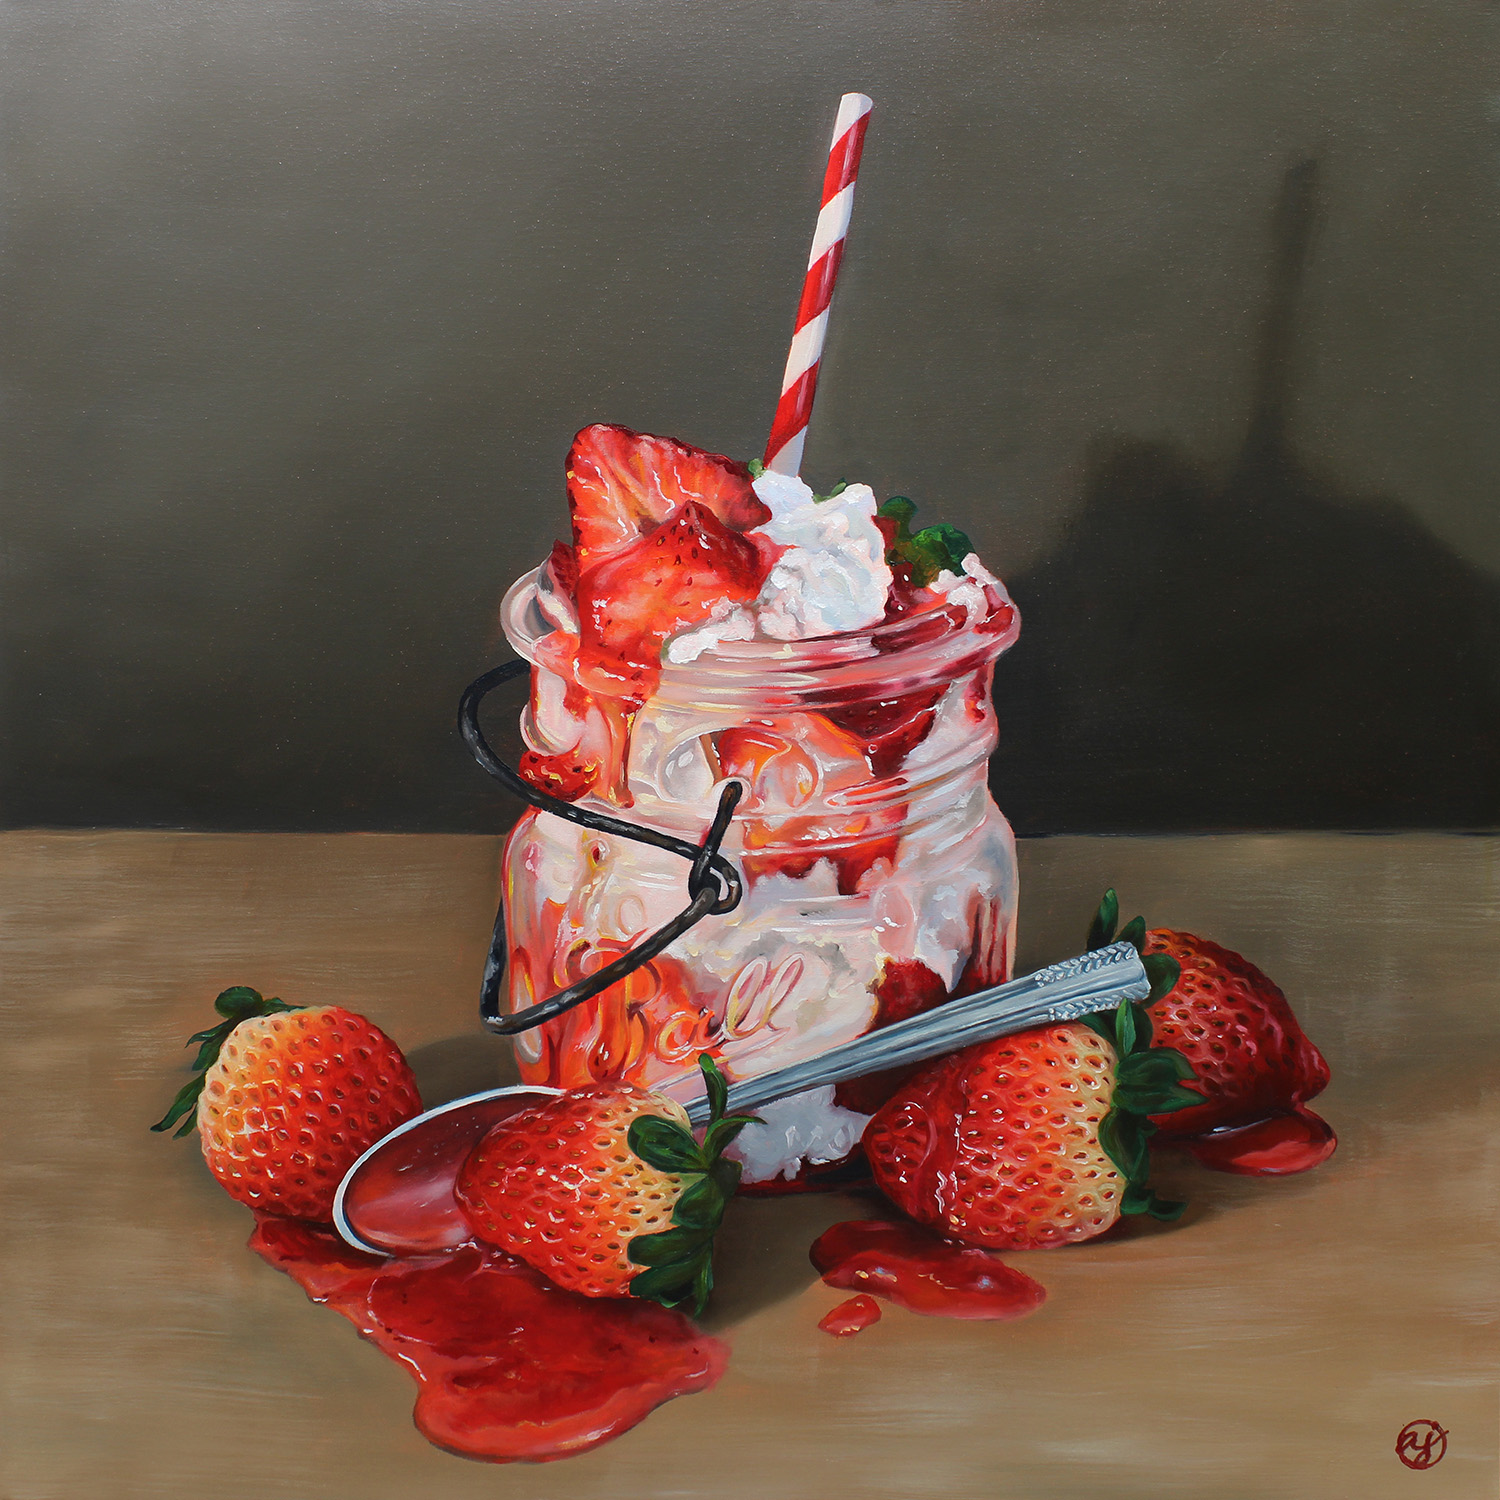 "Strawberries & Cream" 24x24 Original Oil Painting by Abra Johnson